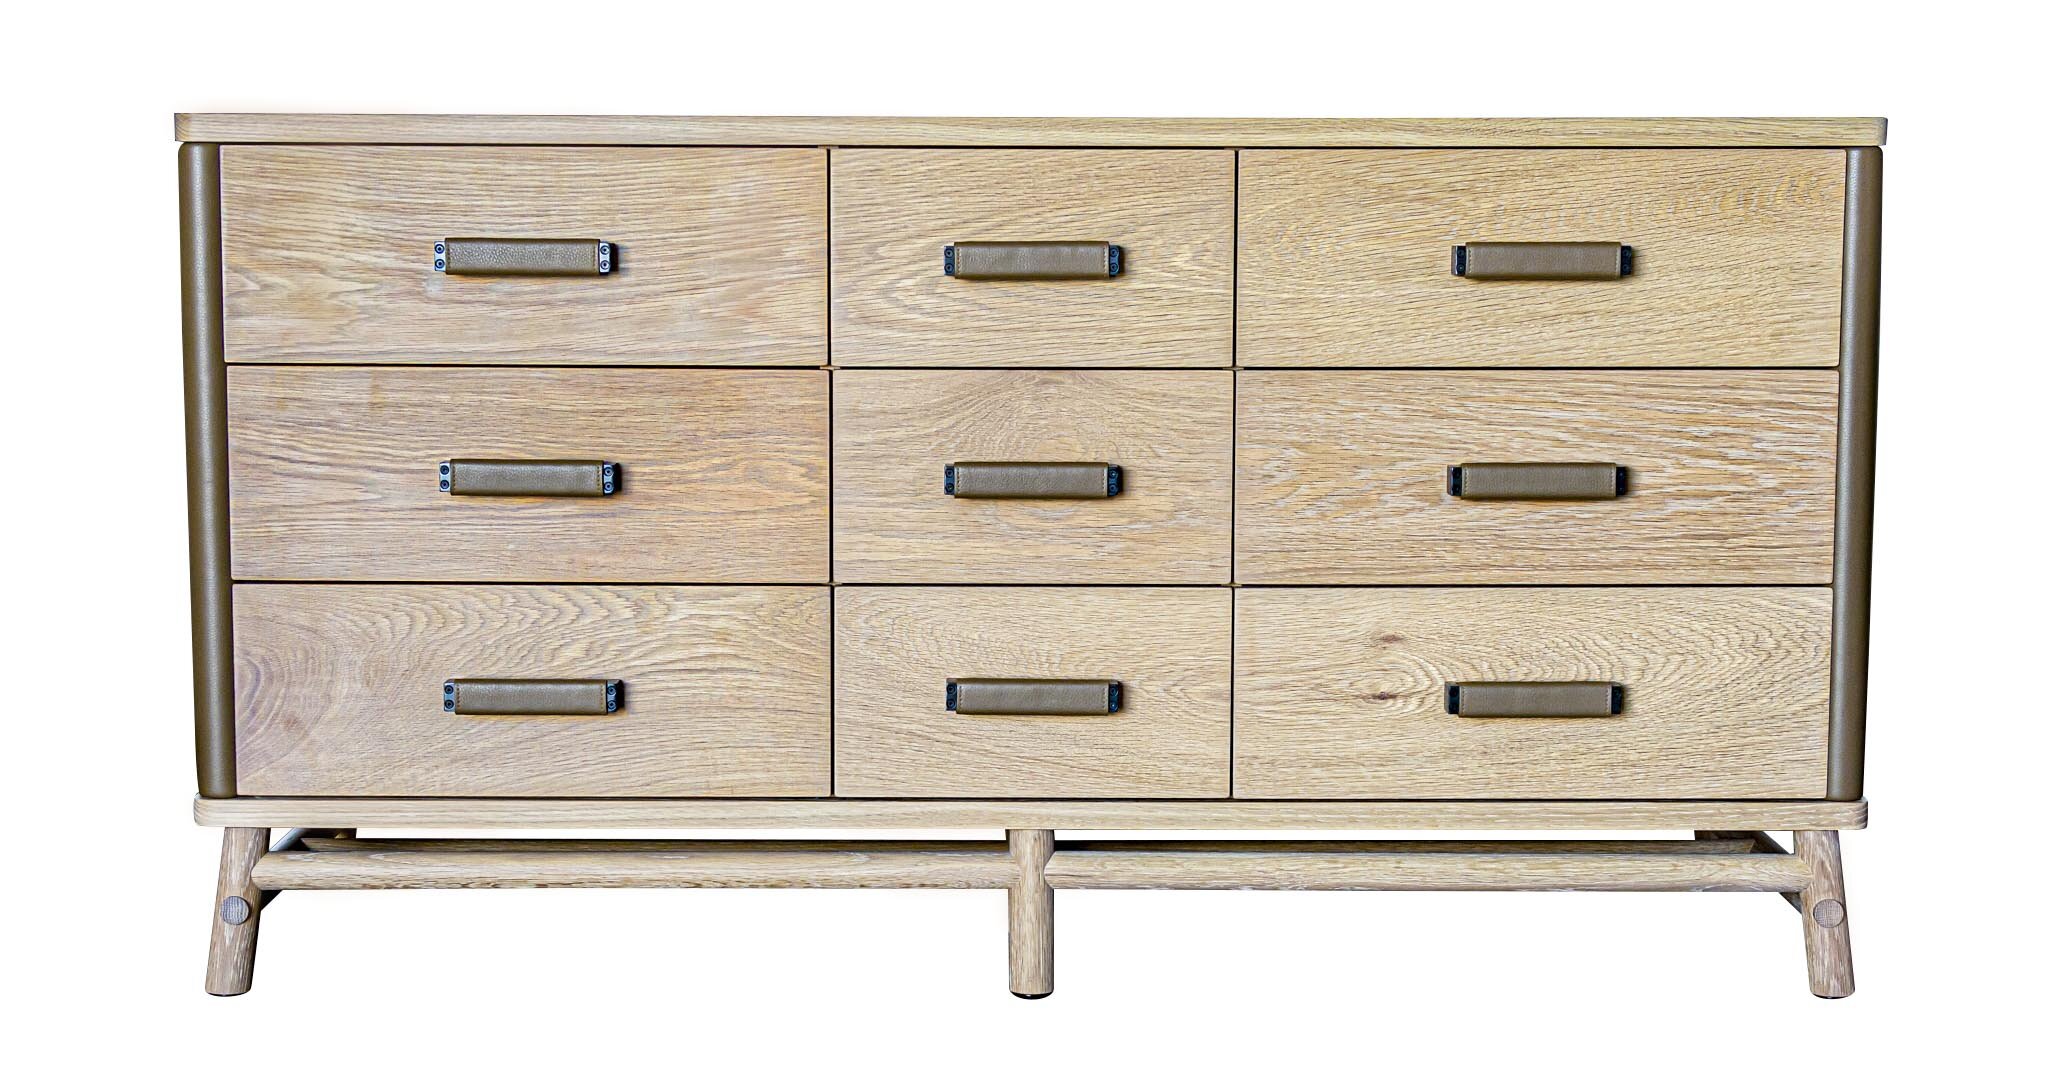 Lambert Dresser with Collingwood Trunk drawer pulls